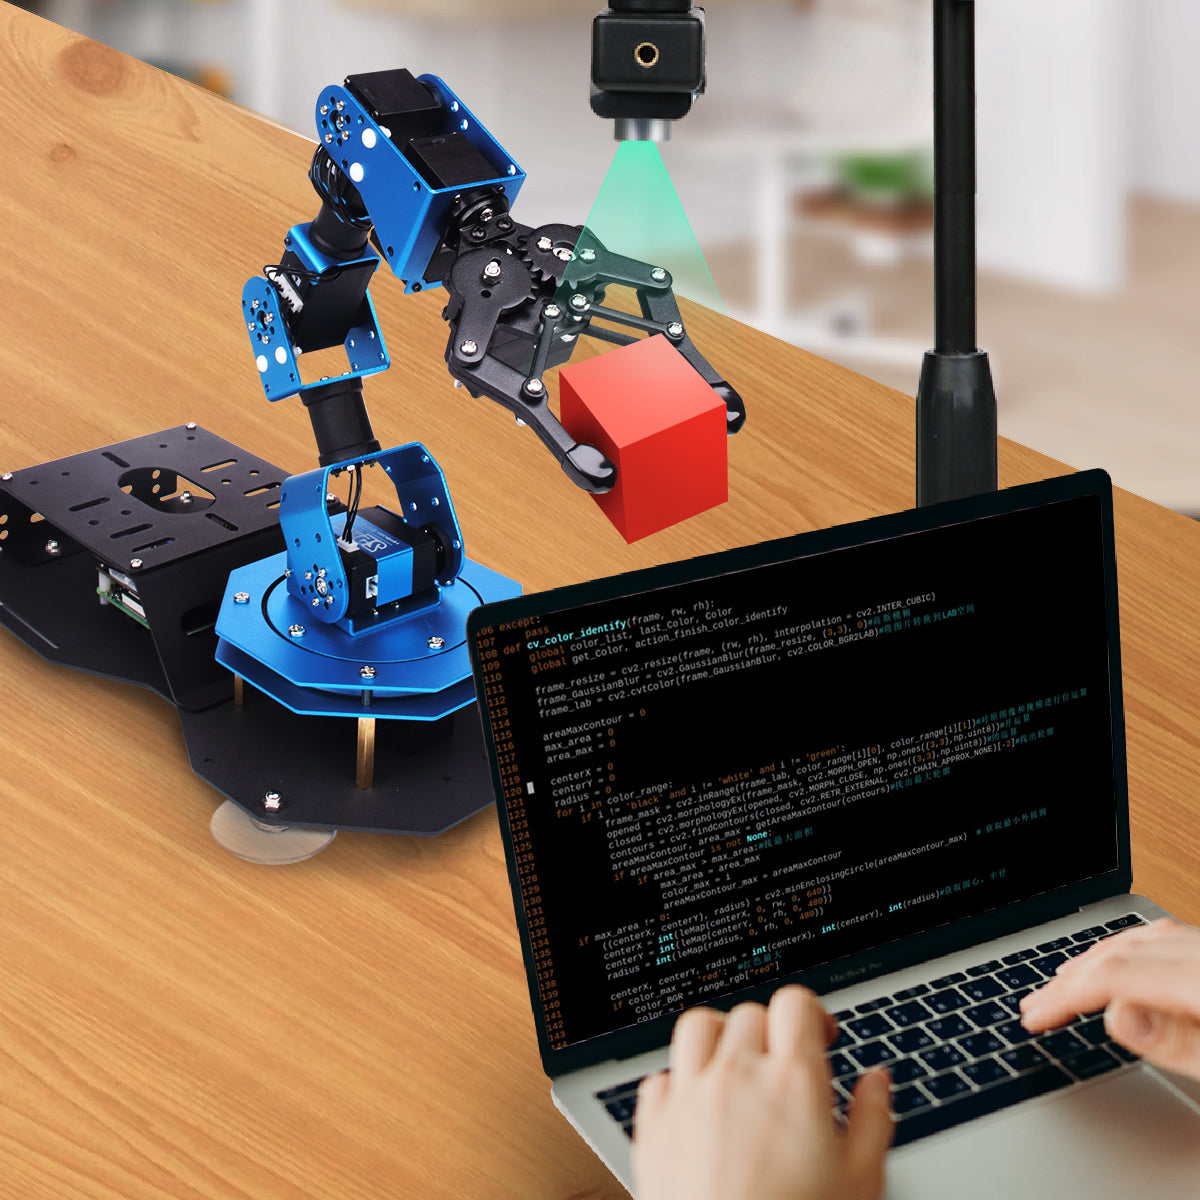 ArmPi Hiwonder Raspberry Pi 4B 4GB (Included) AI Vision Robotic Arm/ Python Program